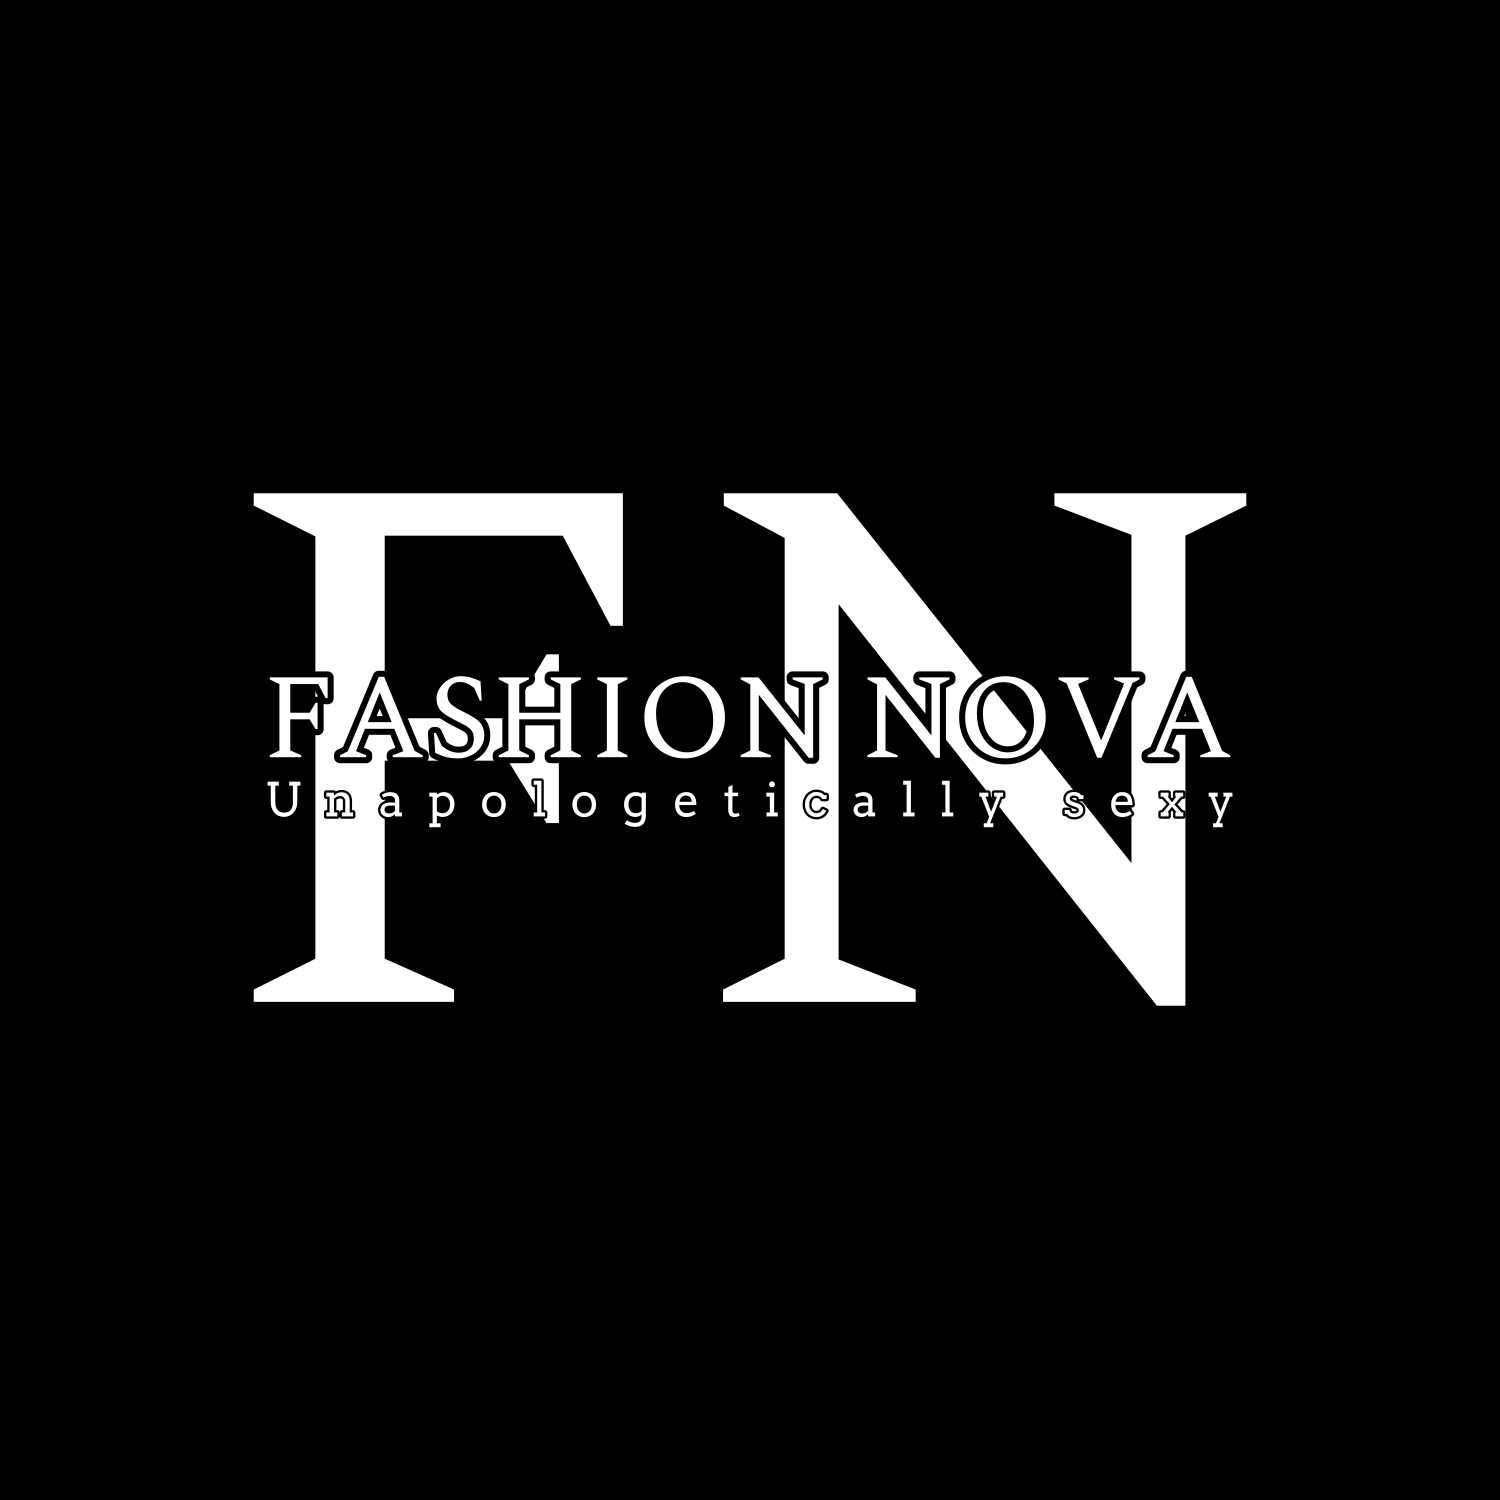 Fashion Nova cover image.